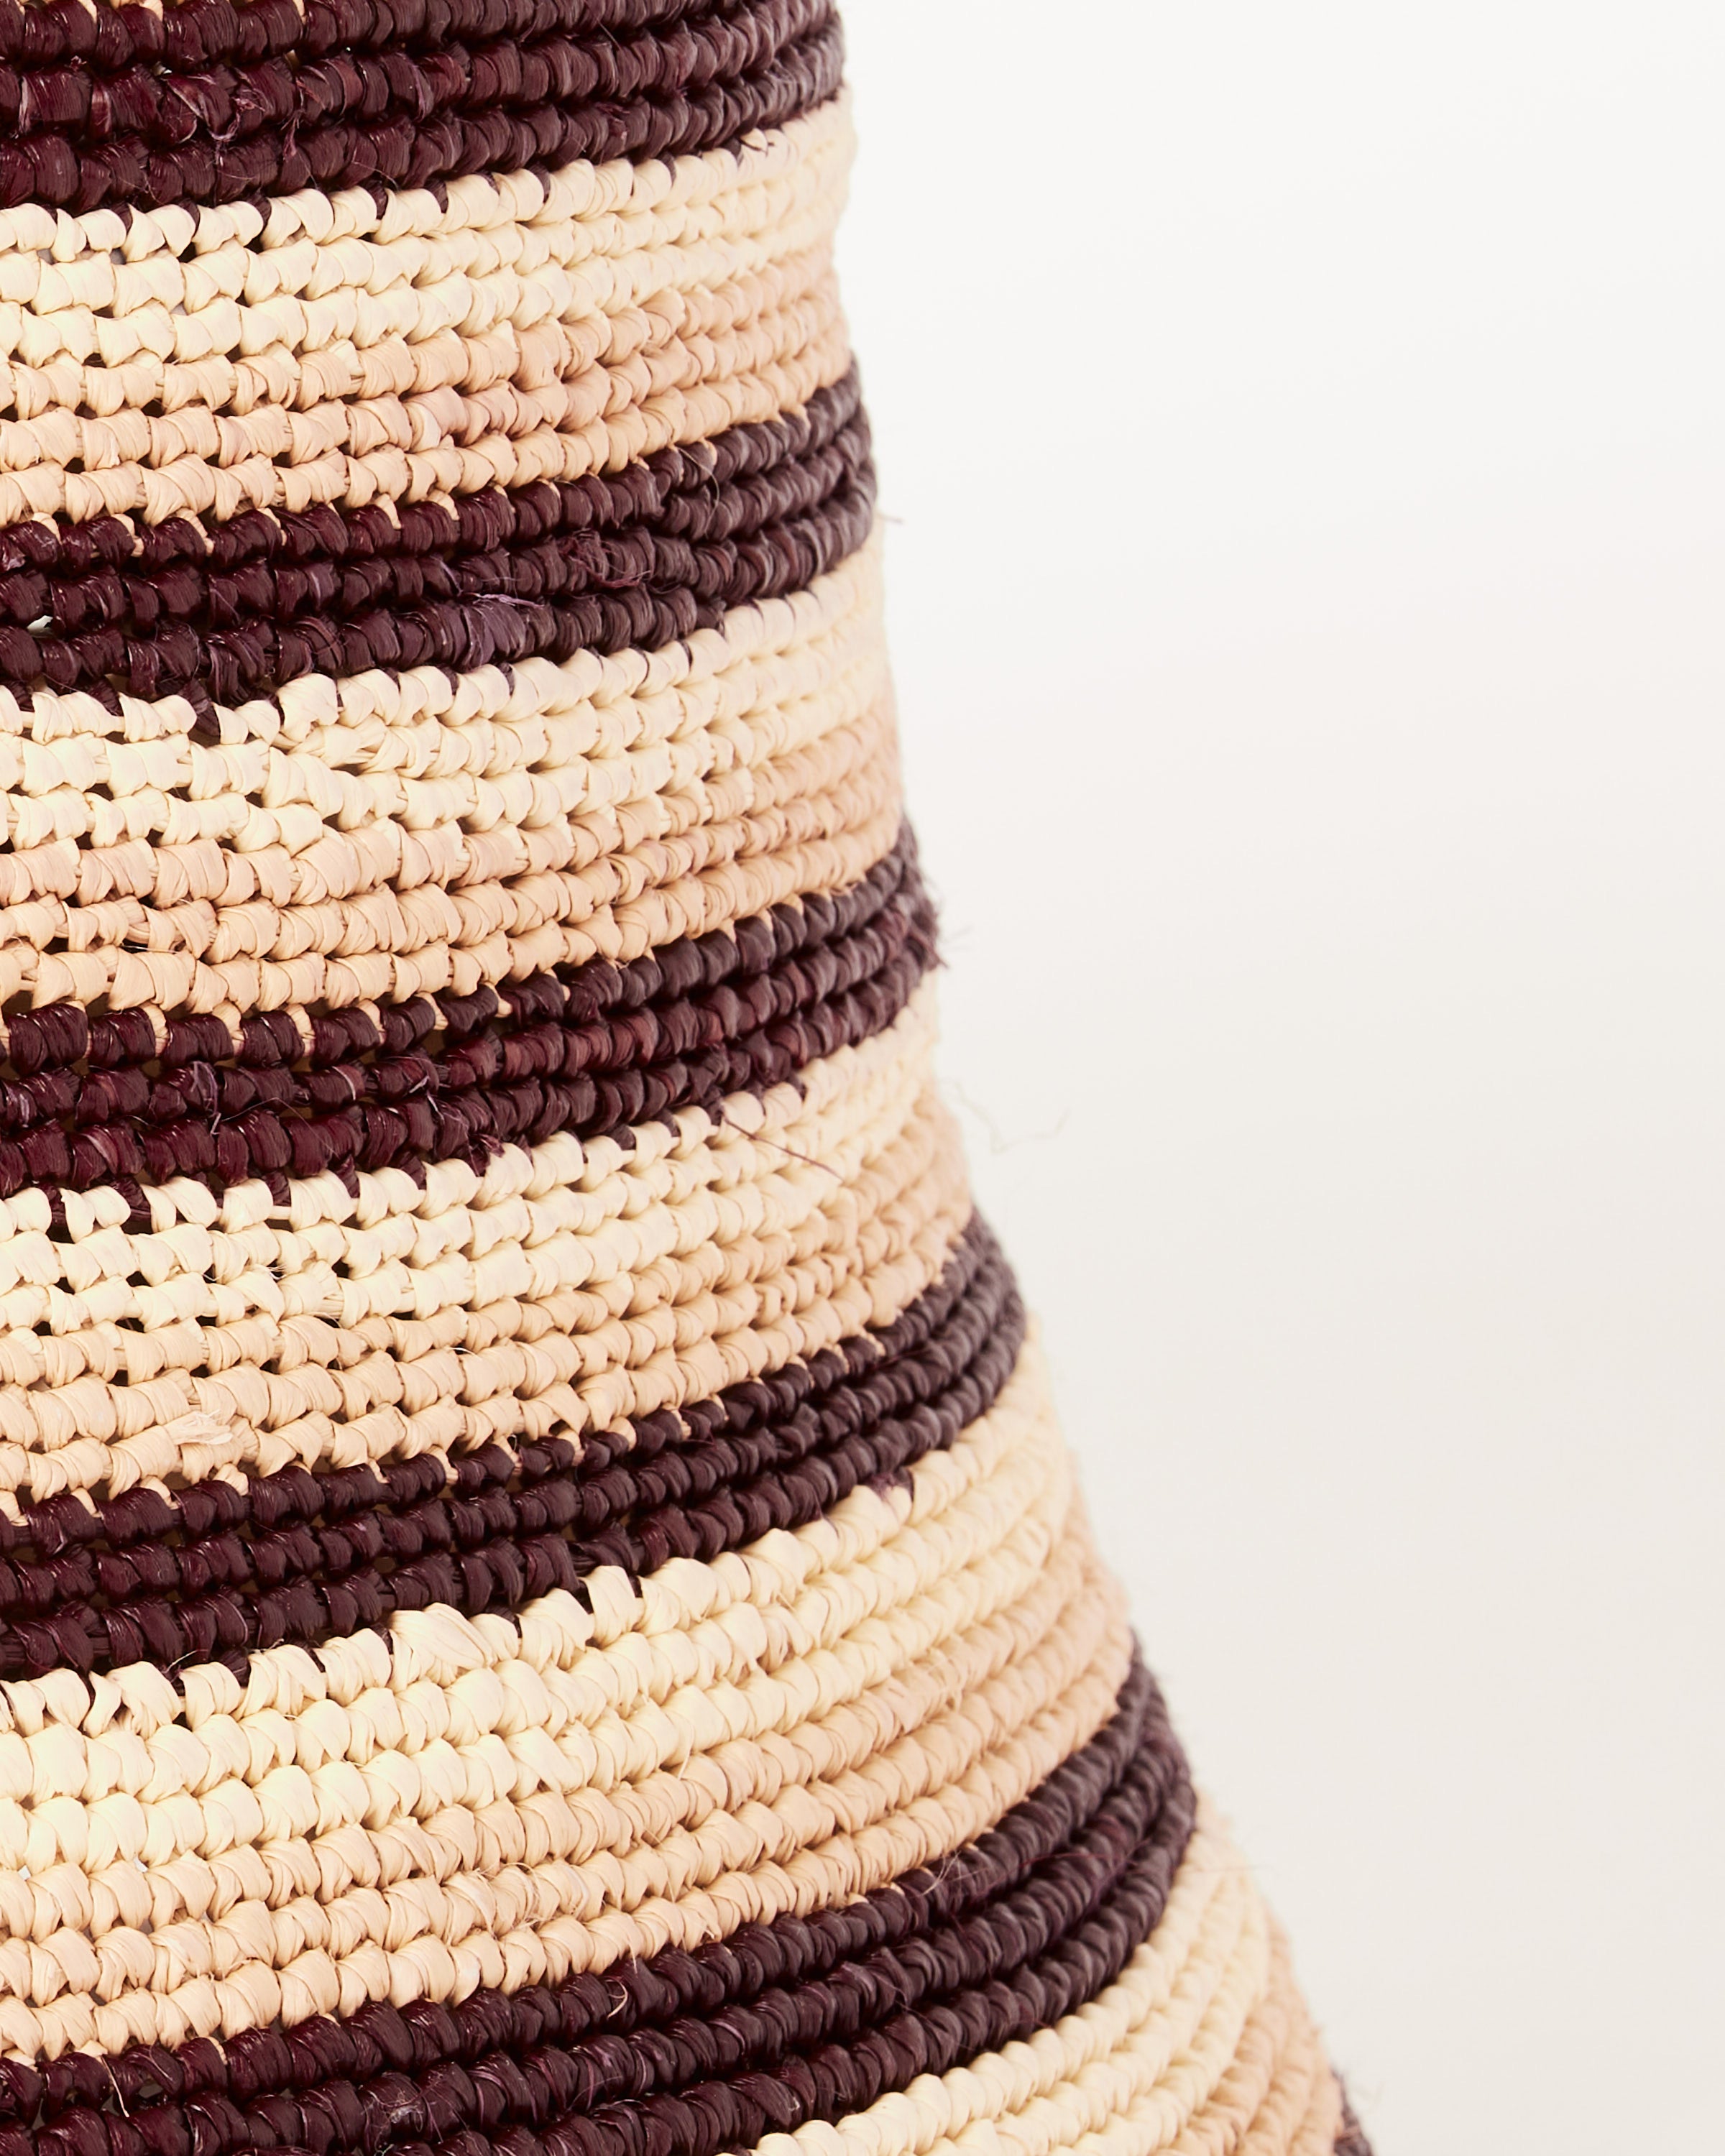 Opia Hat in Cream/Tan/Brown Stripe